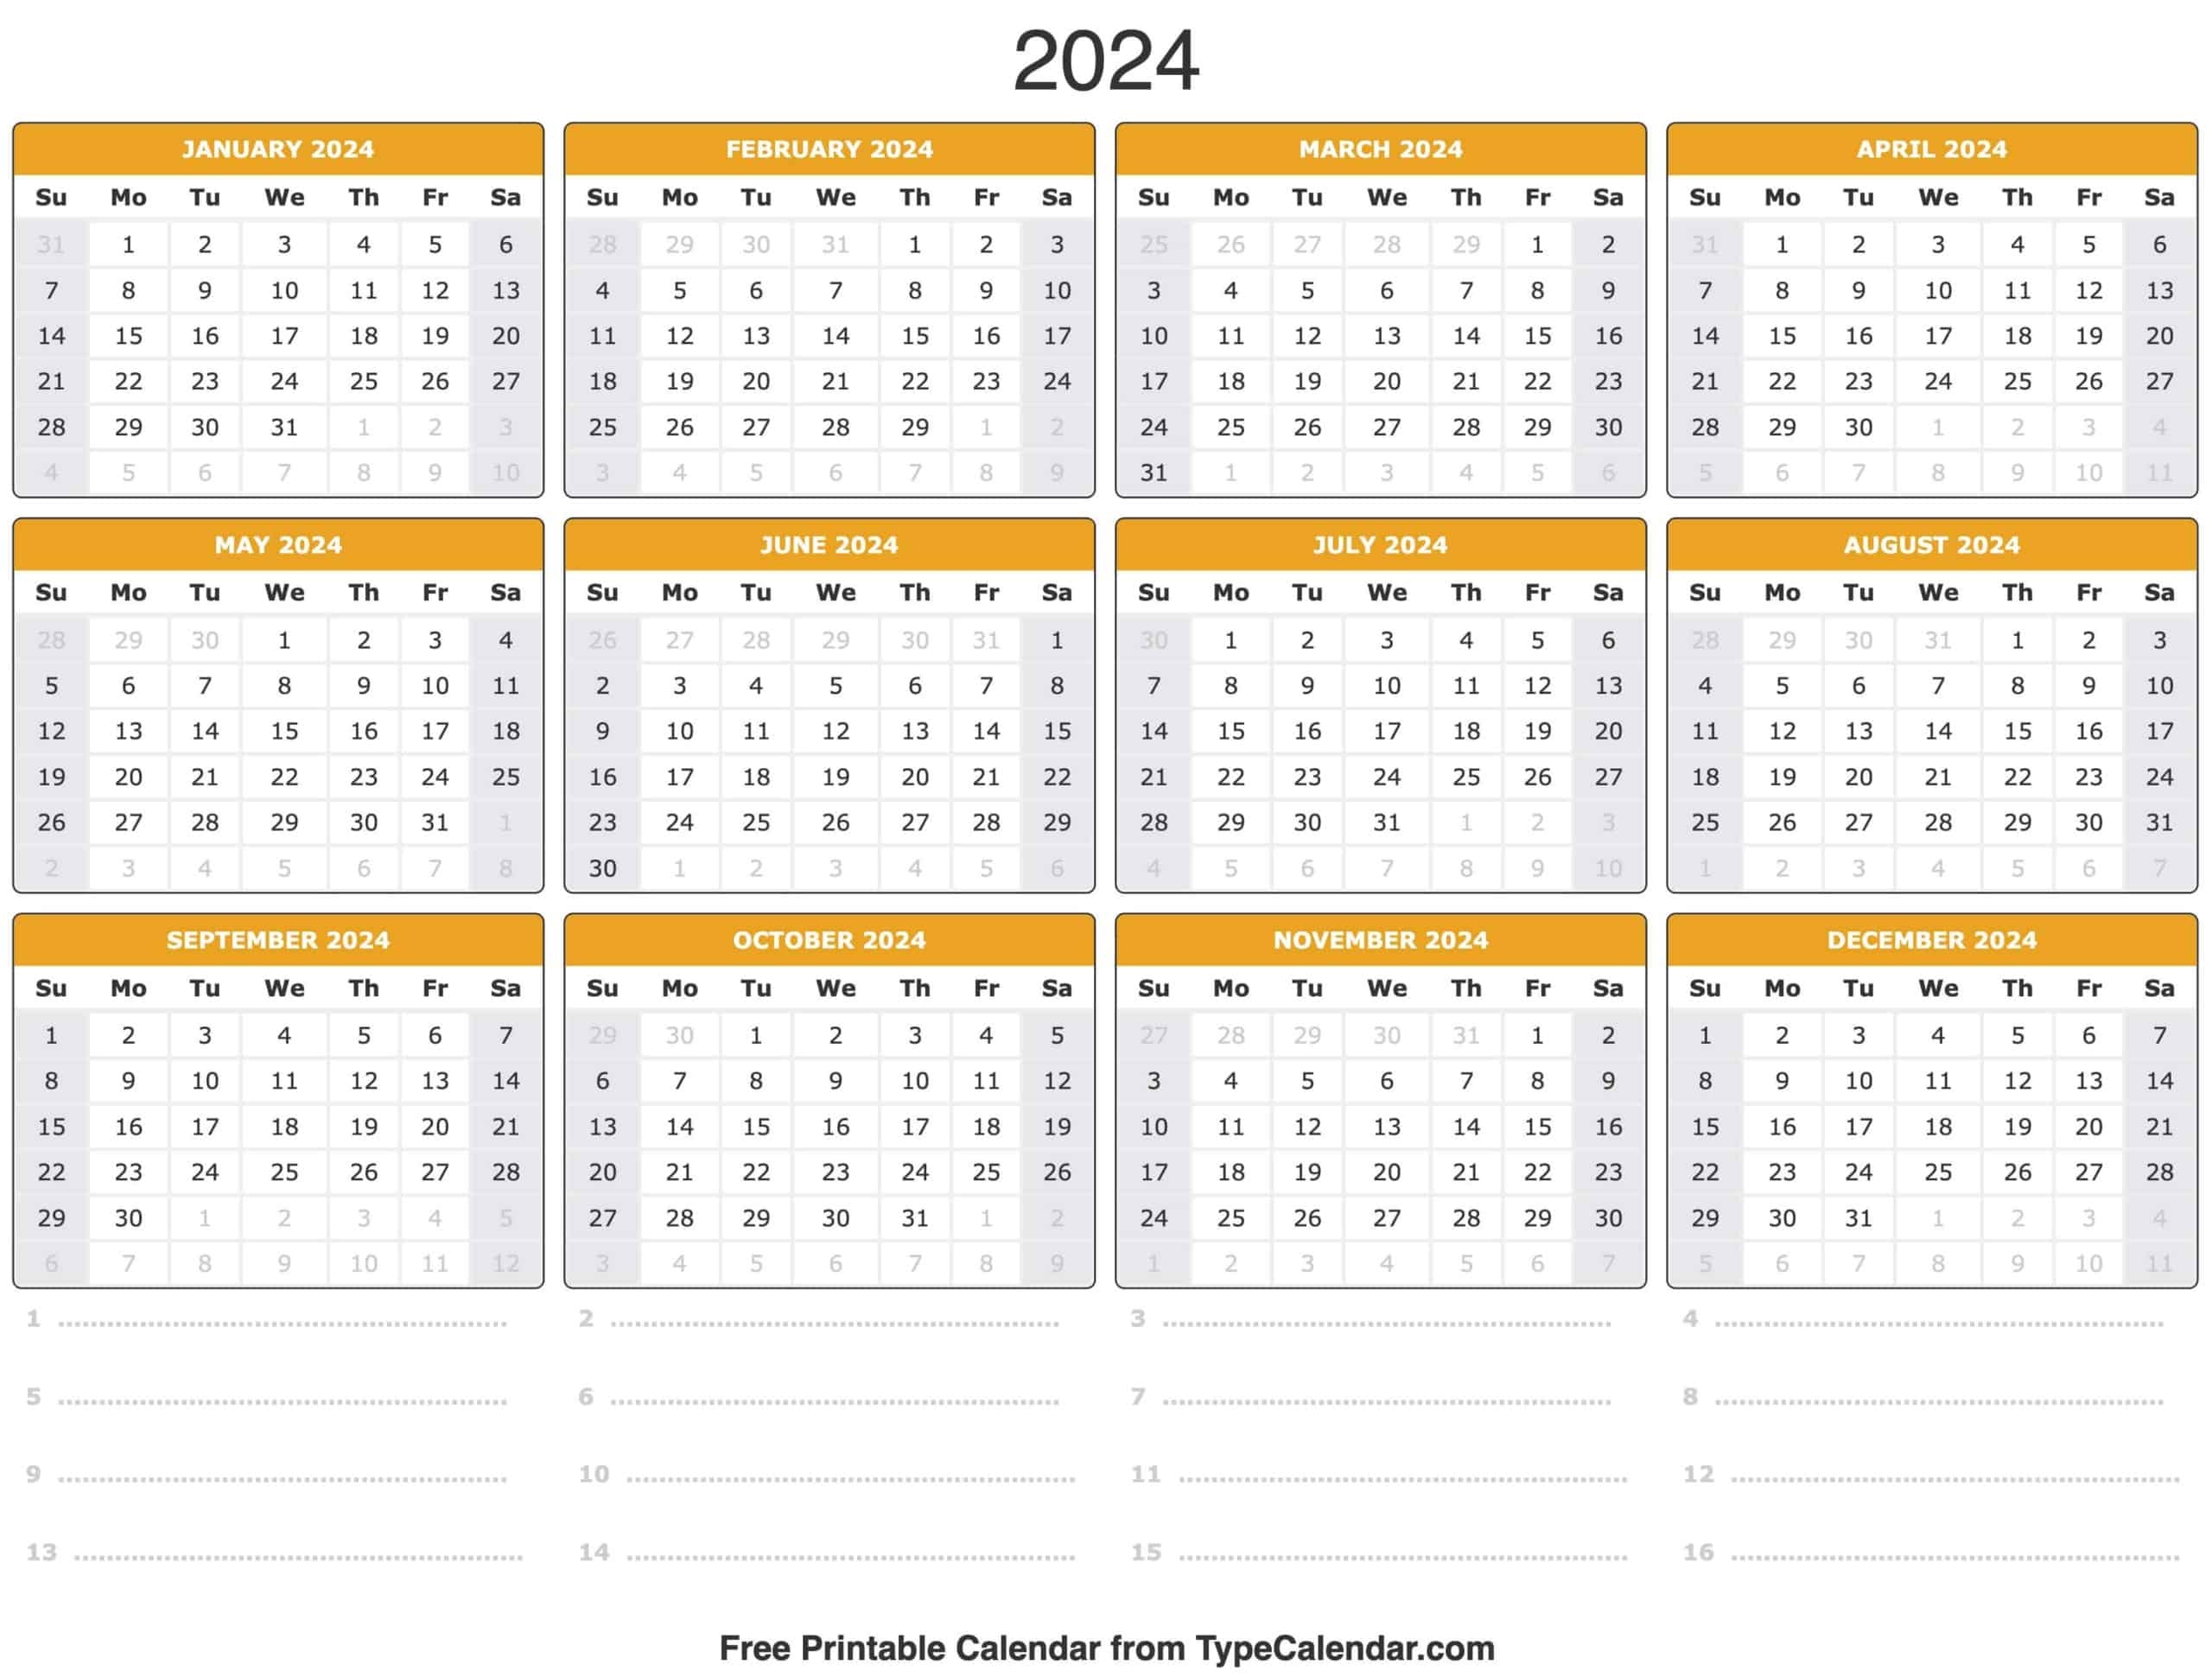 2024 Calendar: Free Printable Calendar With Holidays with regard to Free Printable Australian 2024 Monthly Calendar